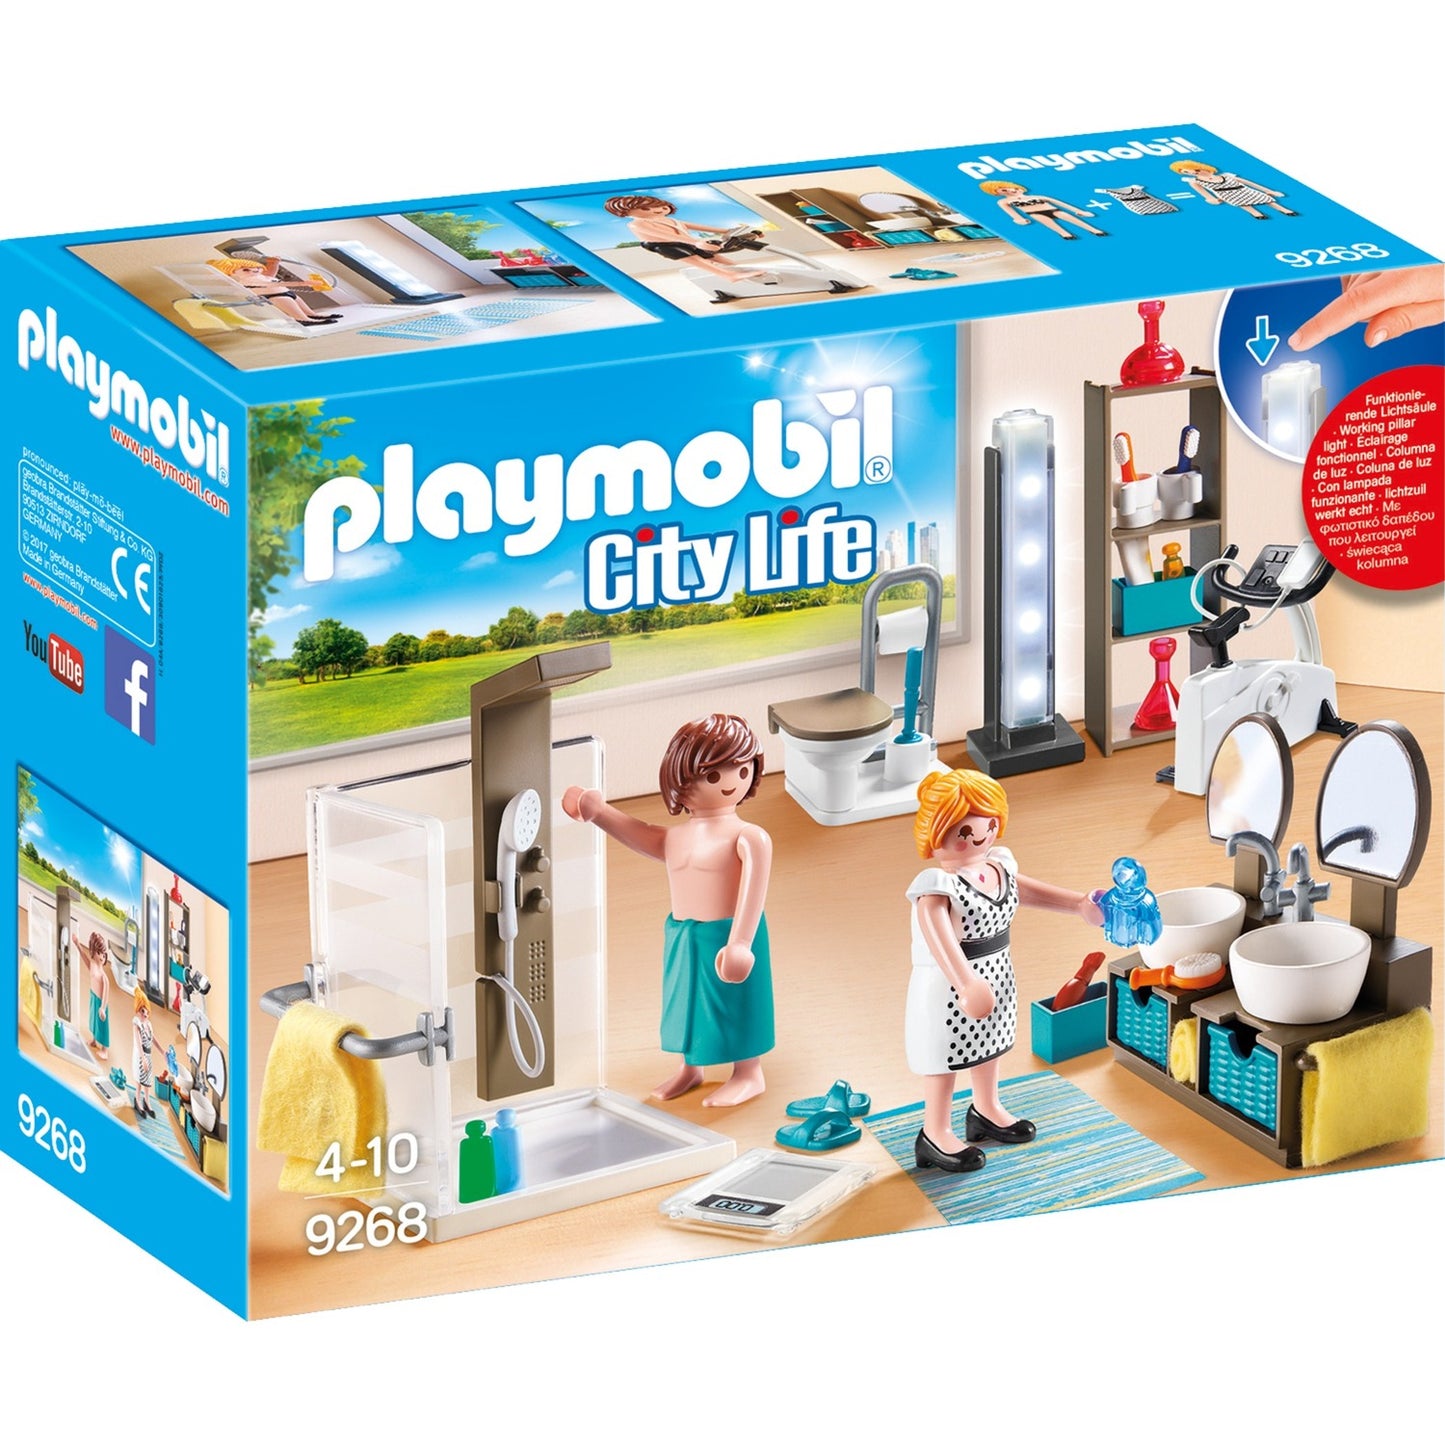 Playmobil City Life Bathroom with Shower 9268